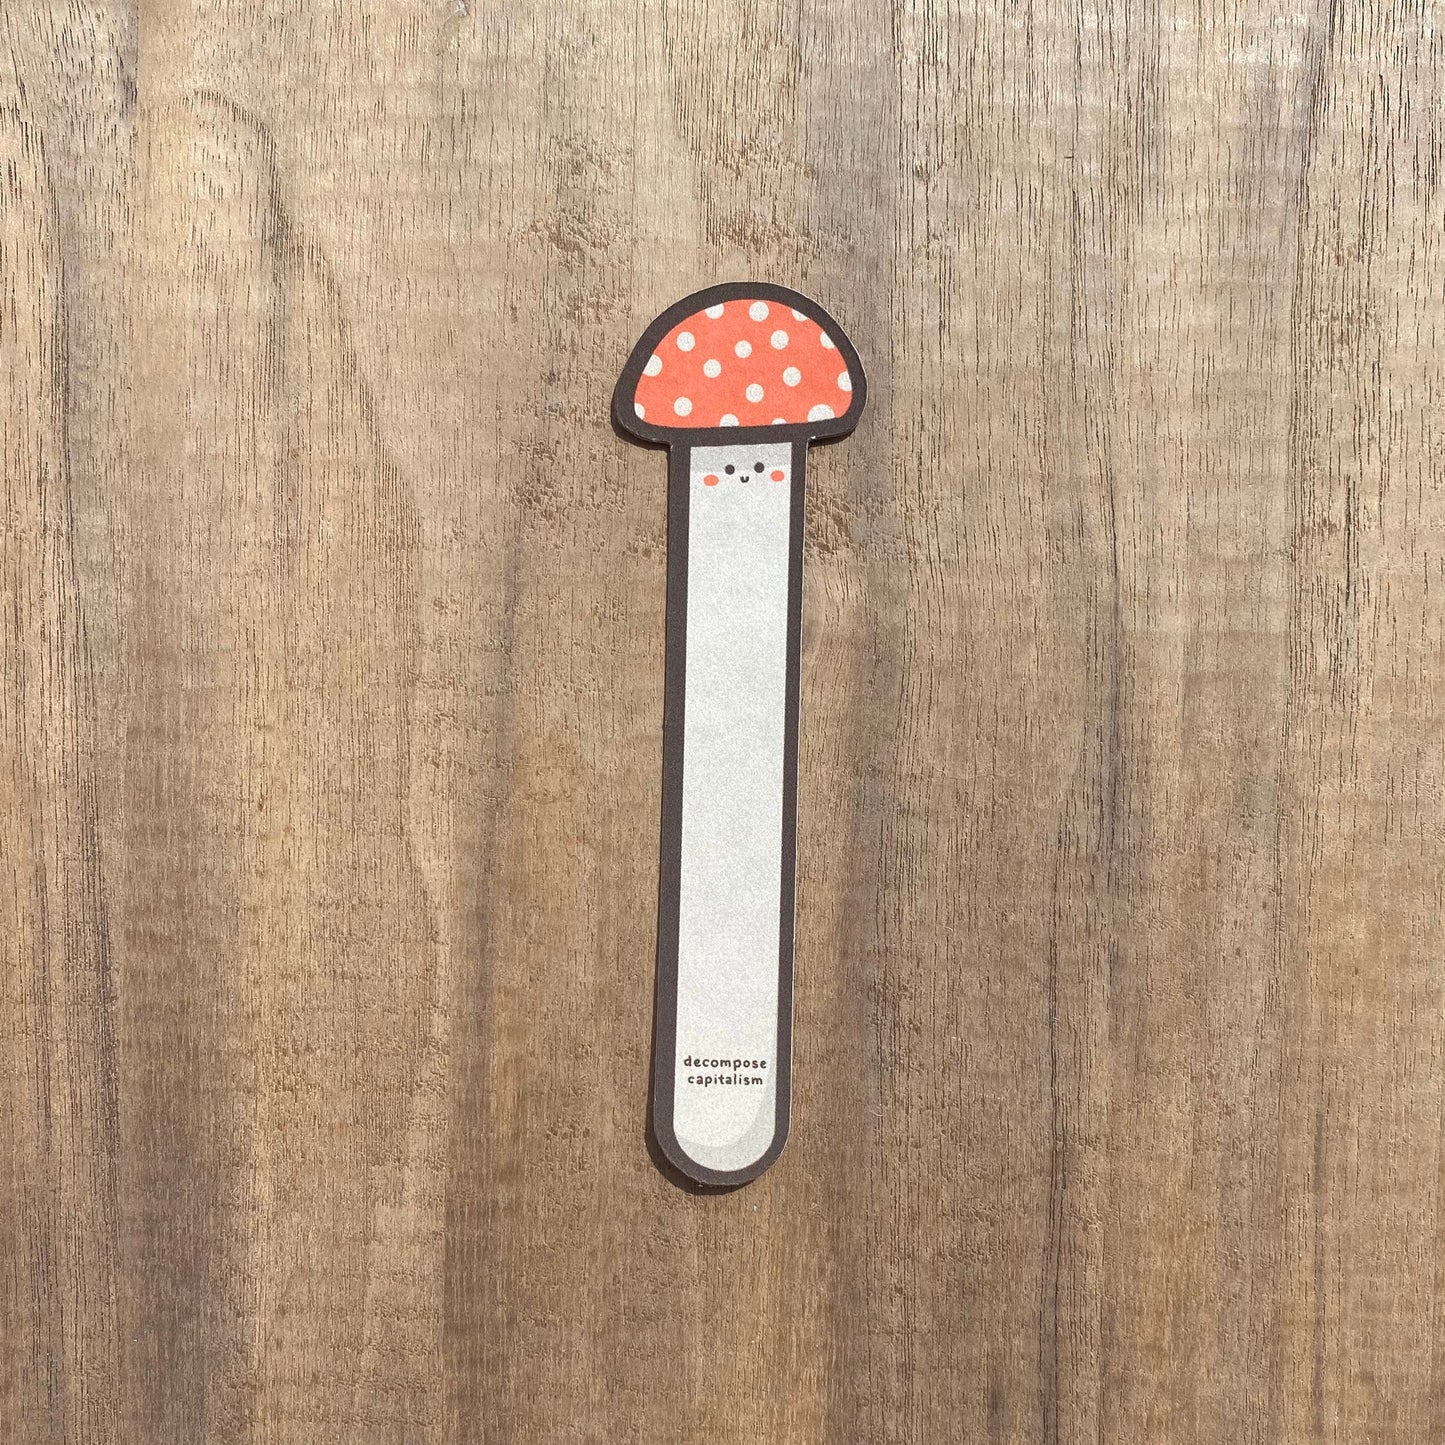 The Revolutionary Mushroom: Bookmarks